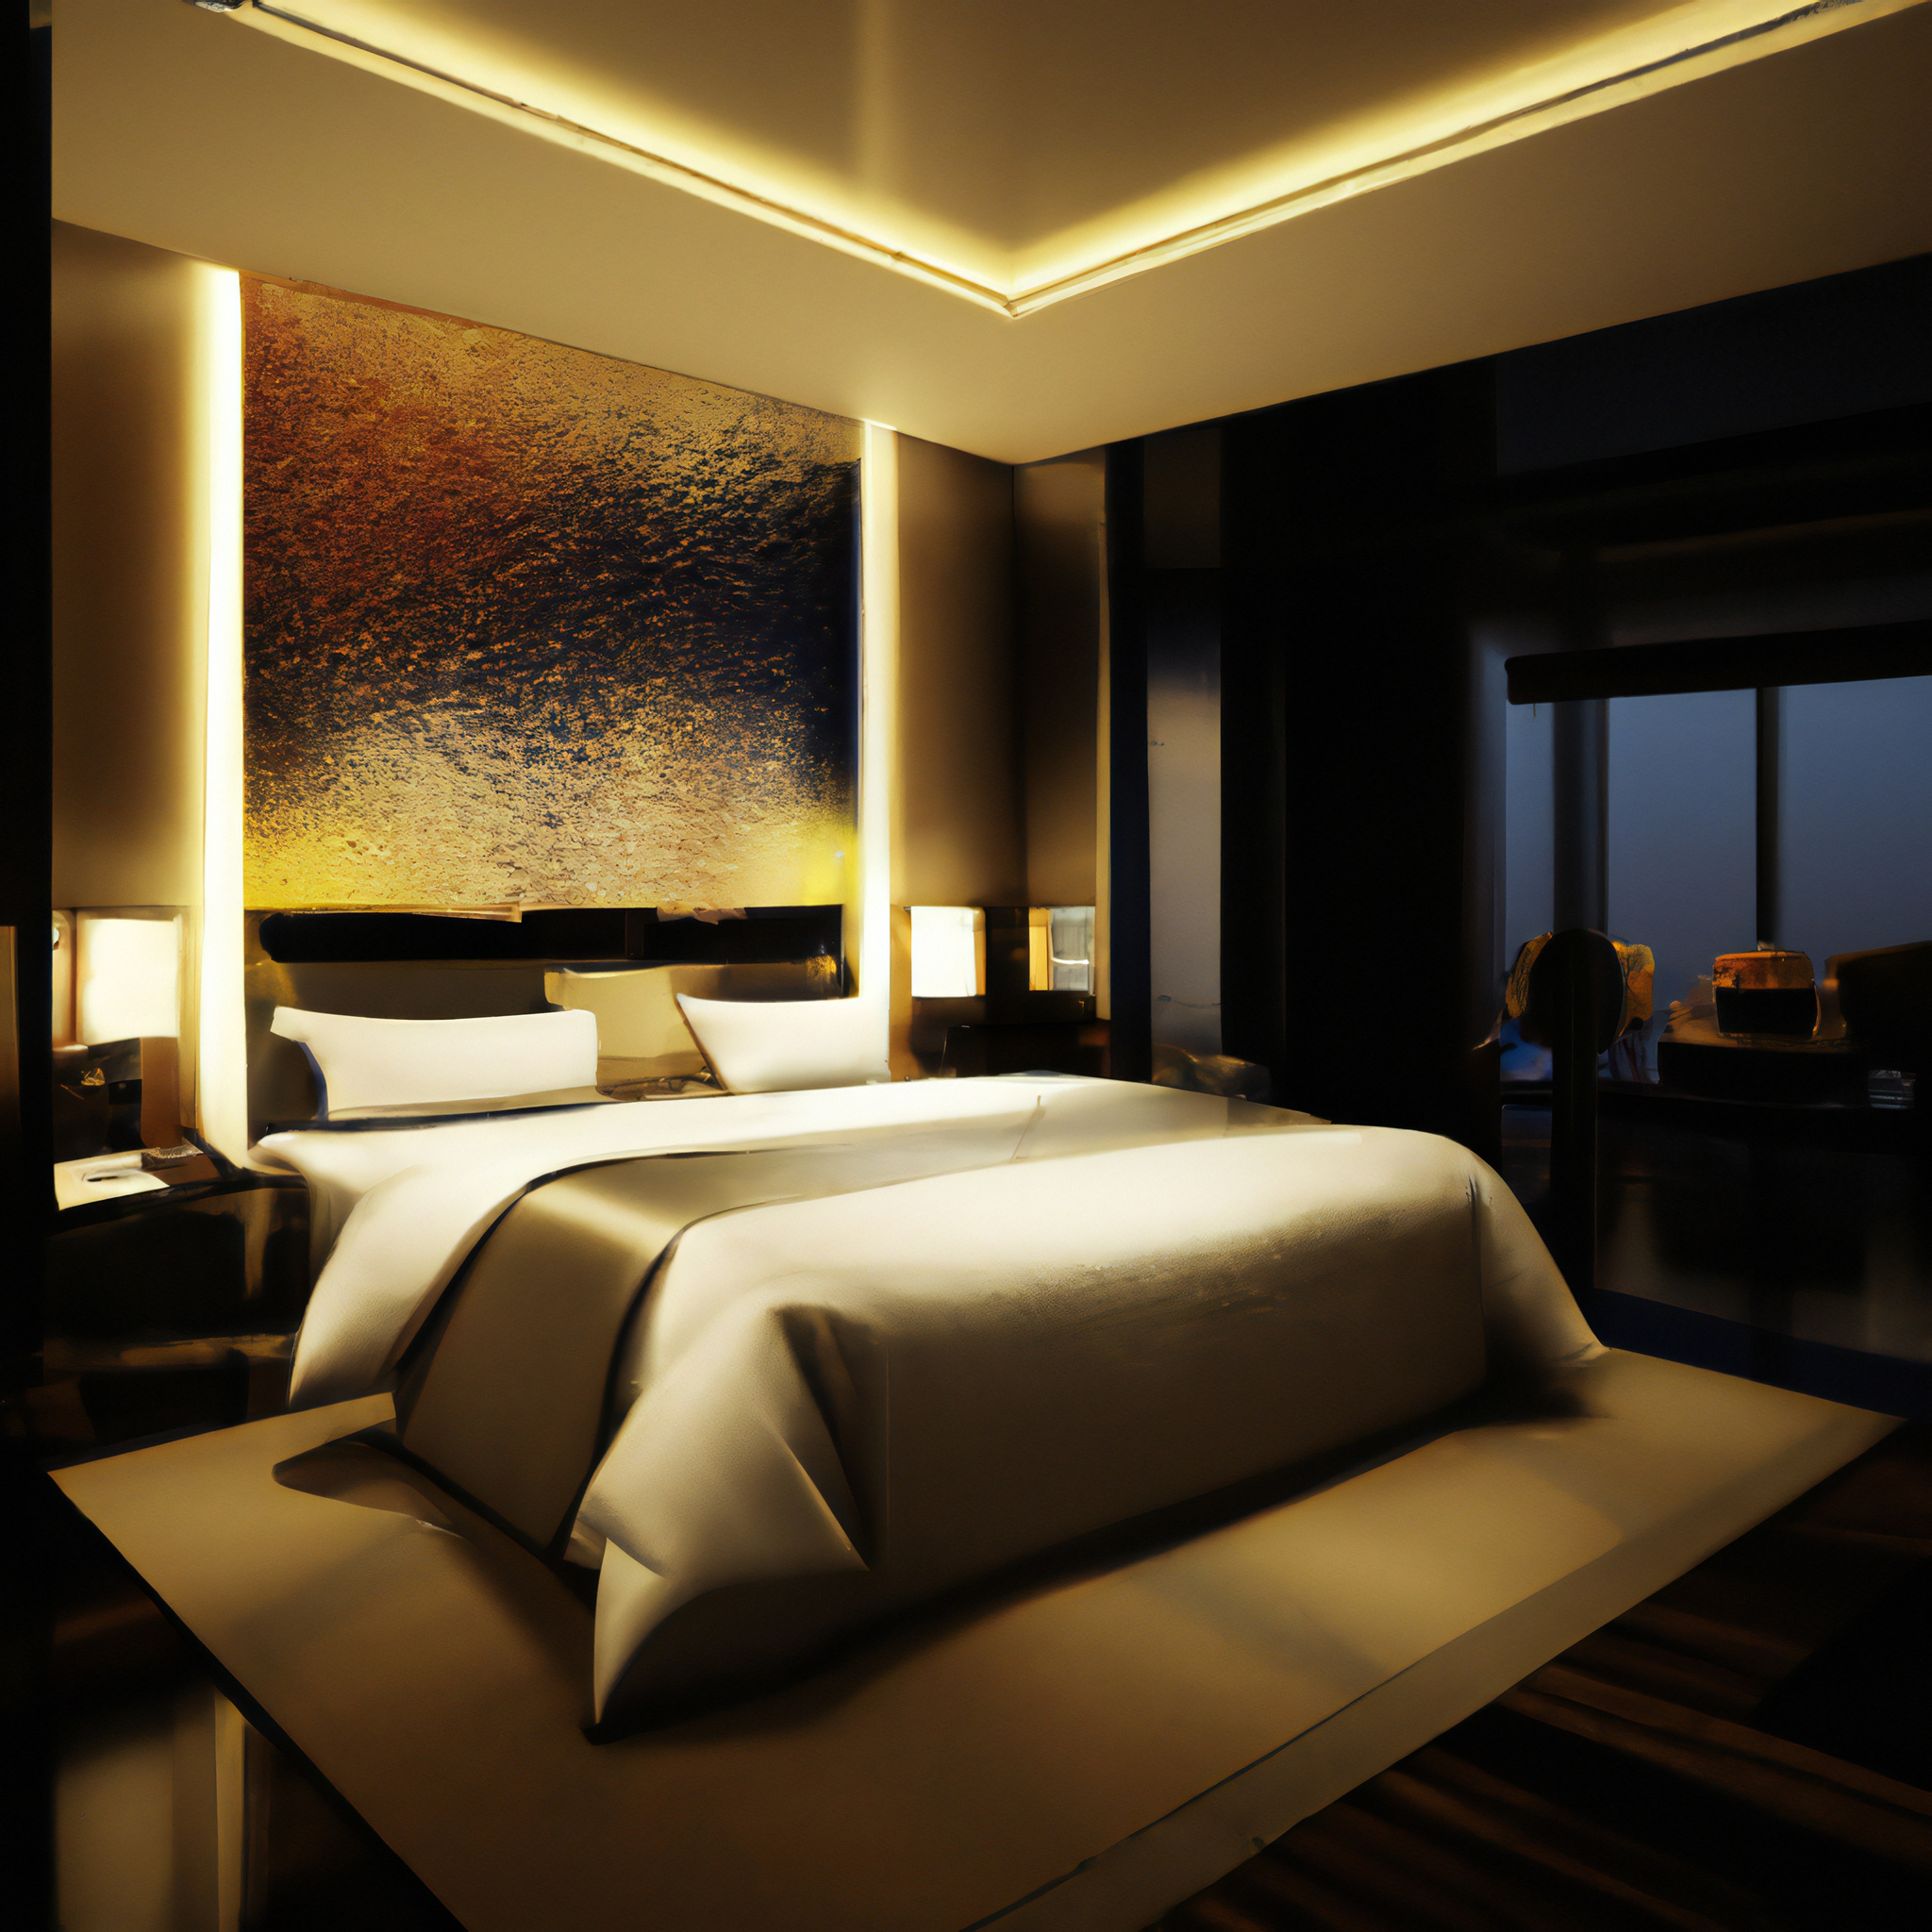 Luxury Hotel Room Interior